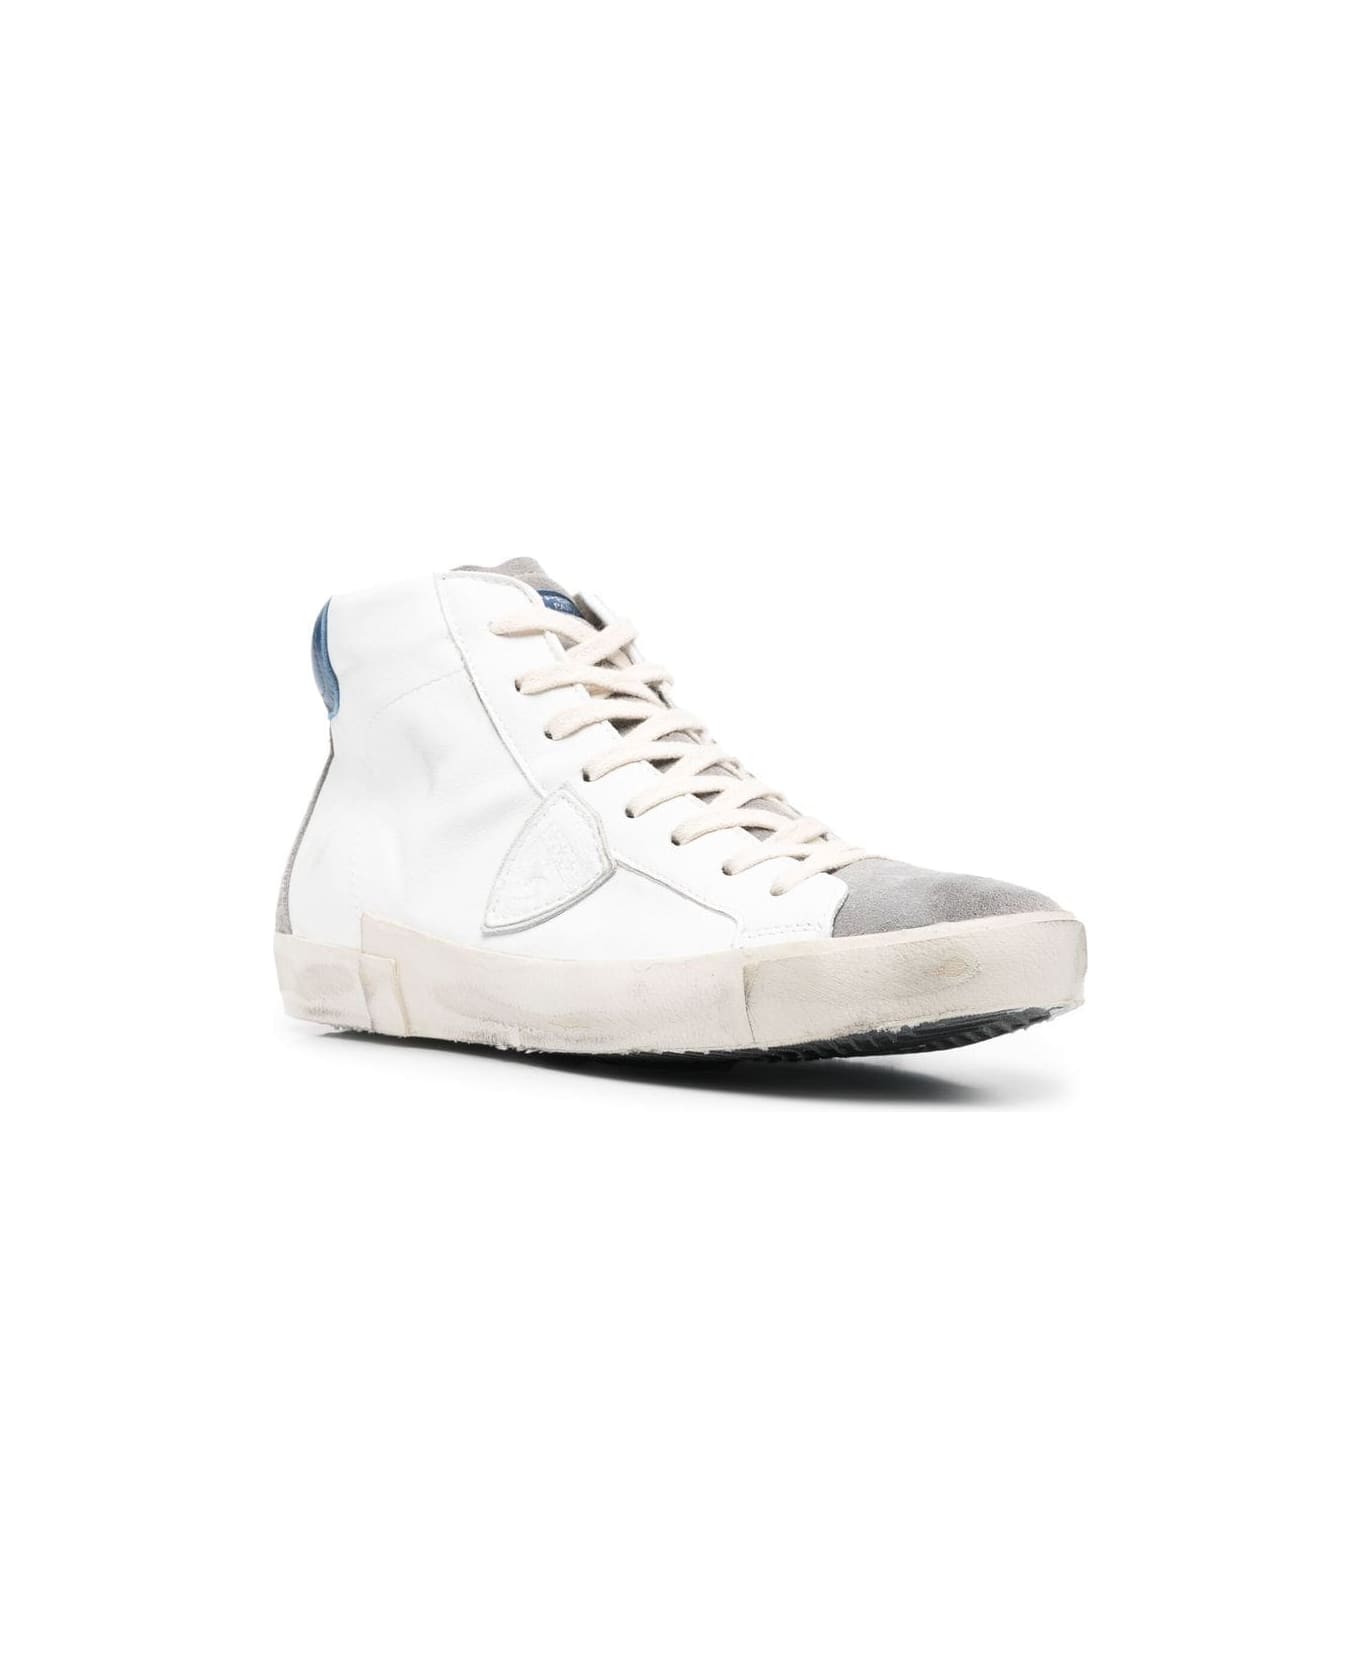 Philippe Model Prsx High Man Sneakers - Vintage Mixage Blanc Gris スニーカー